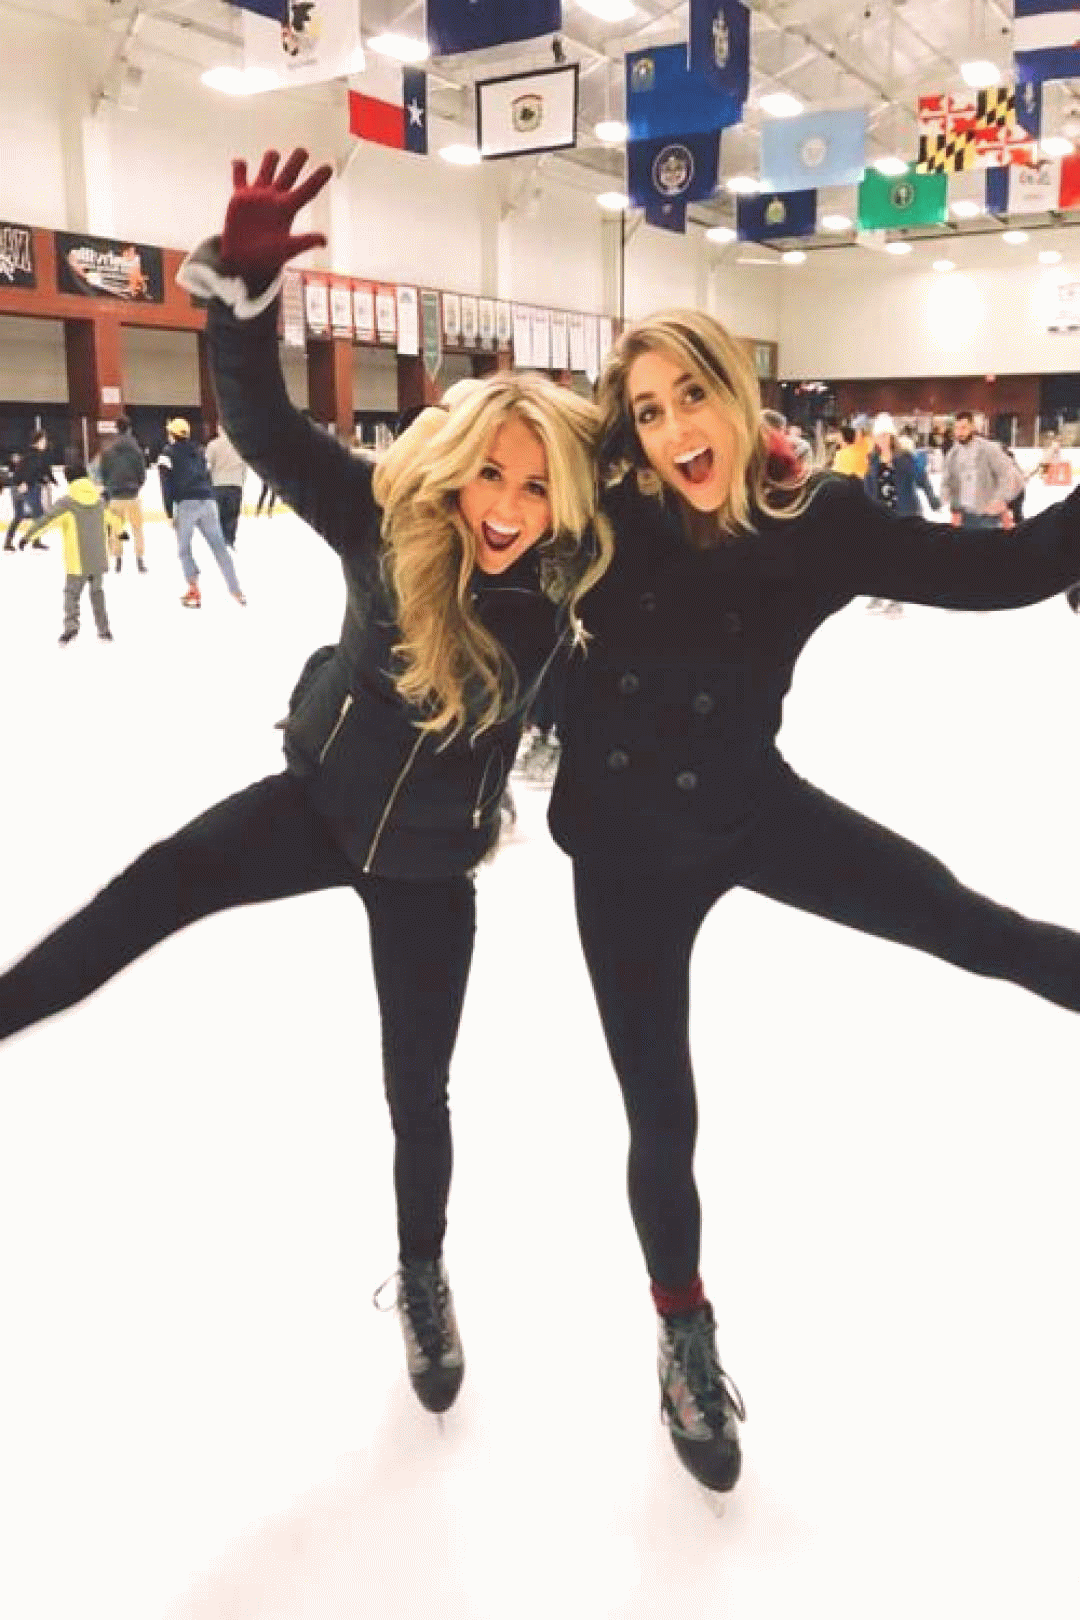 bff pictures squad ice skating cute instagram pics bilder eislauf outfits pair medium